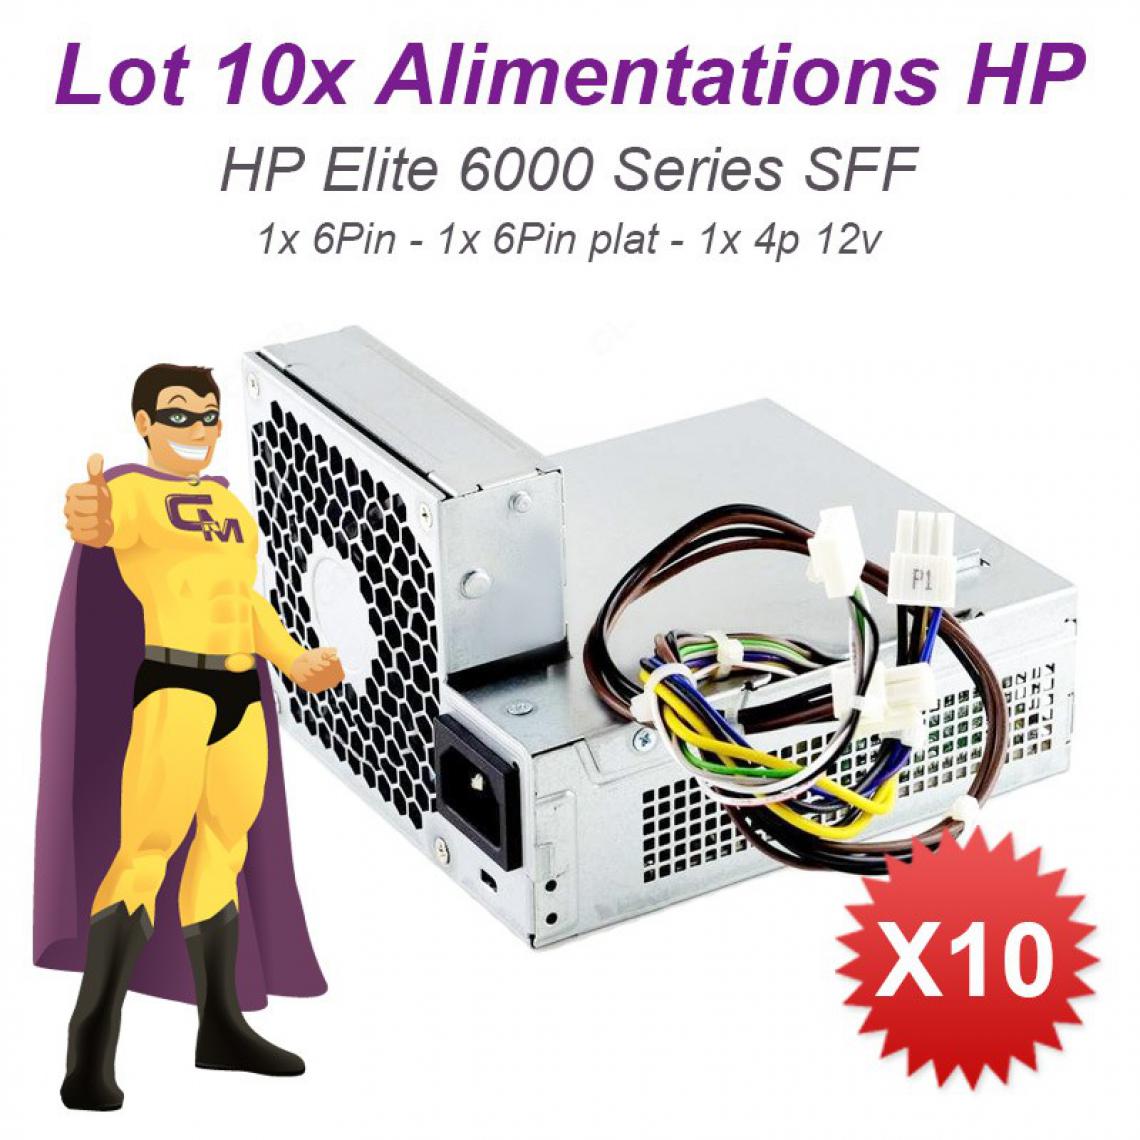 Hp - Lot 10x Alimentations PC HP Elite 6000 6005 6200 6300 SFF 611481-001 613762-001 - Alimentation modulaire